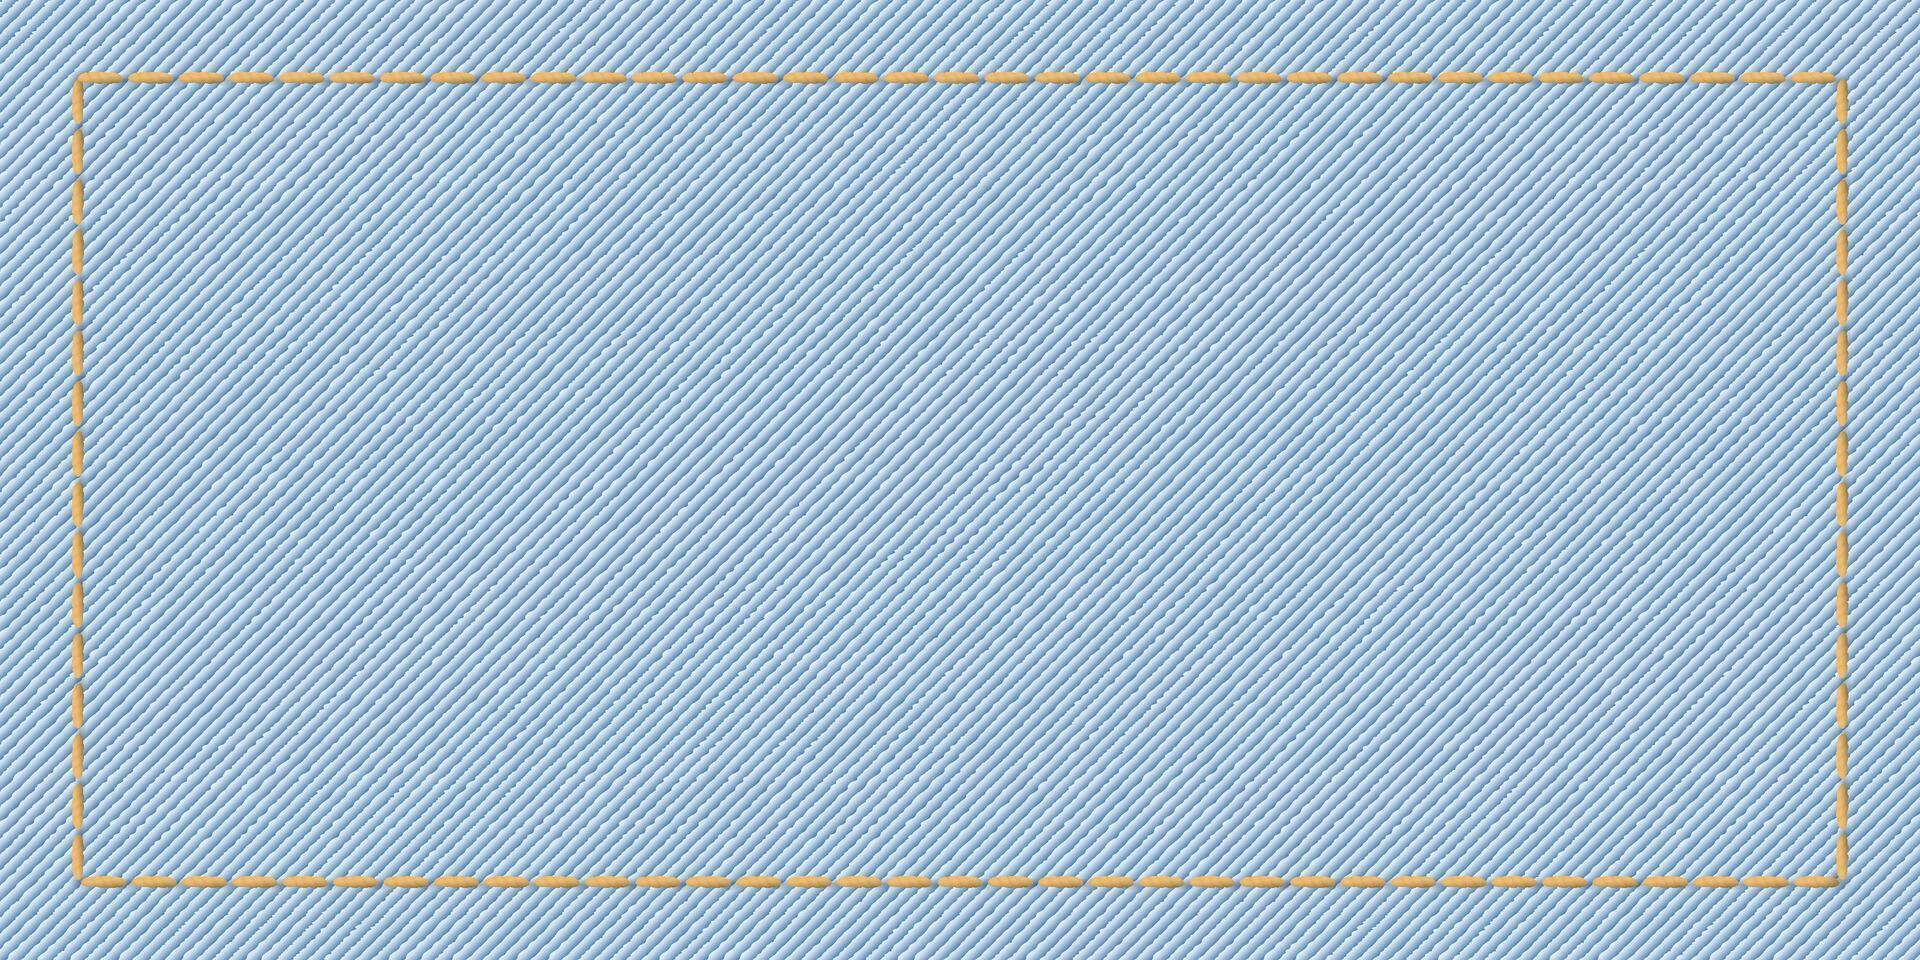 Denim jean textile light wash colors background with gold seams frame illustration. vector